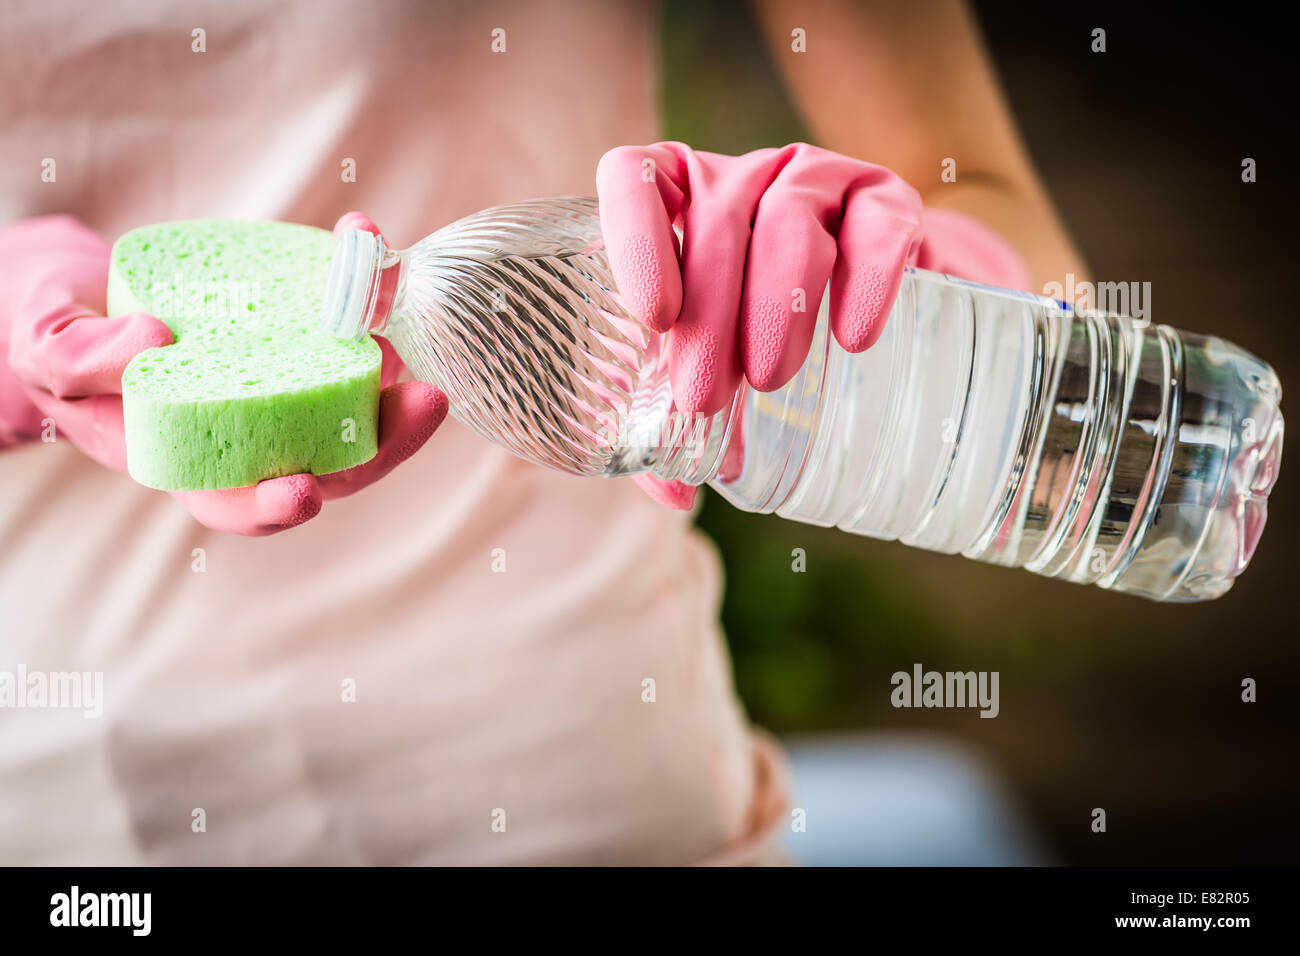 Woman using white vinegar to clean. Stock Photo